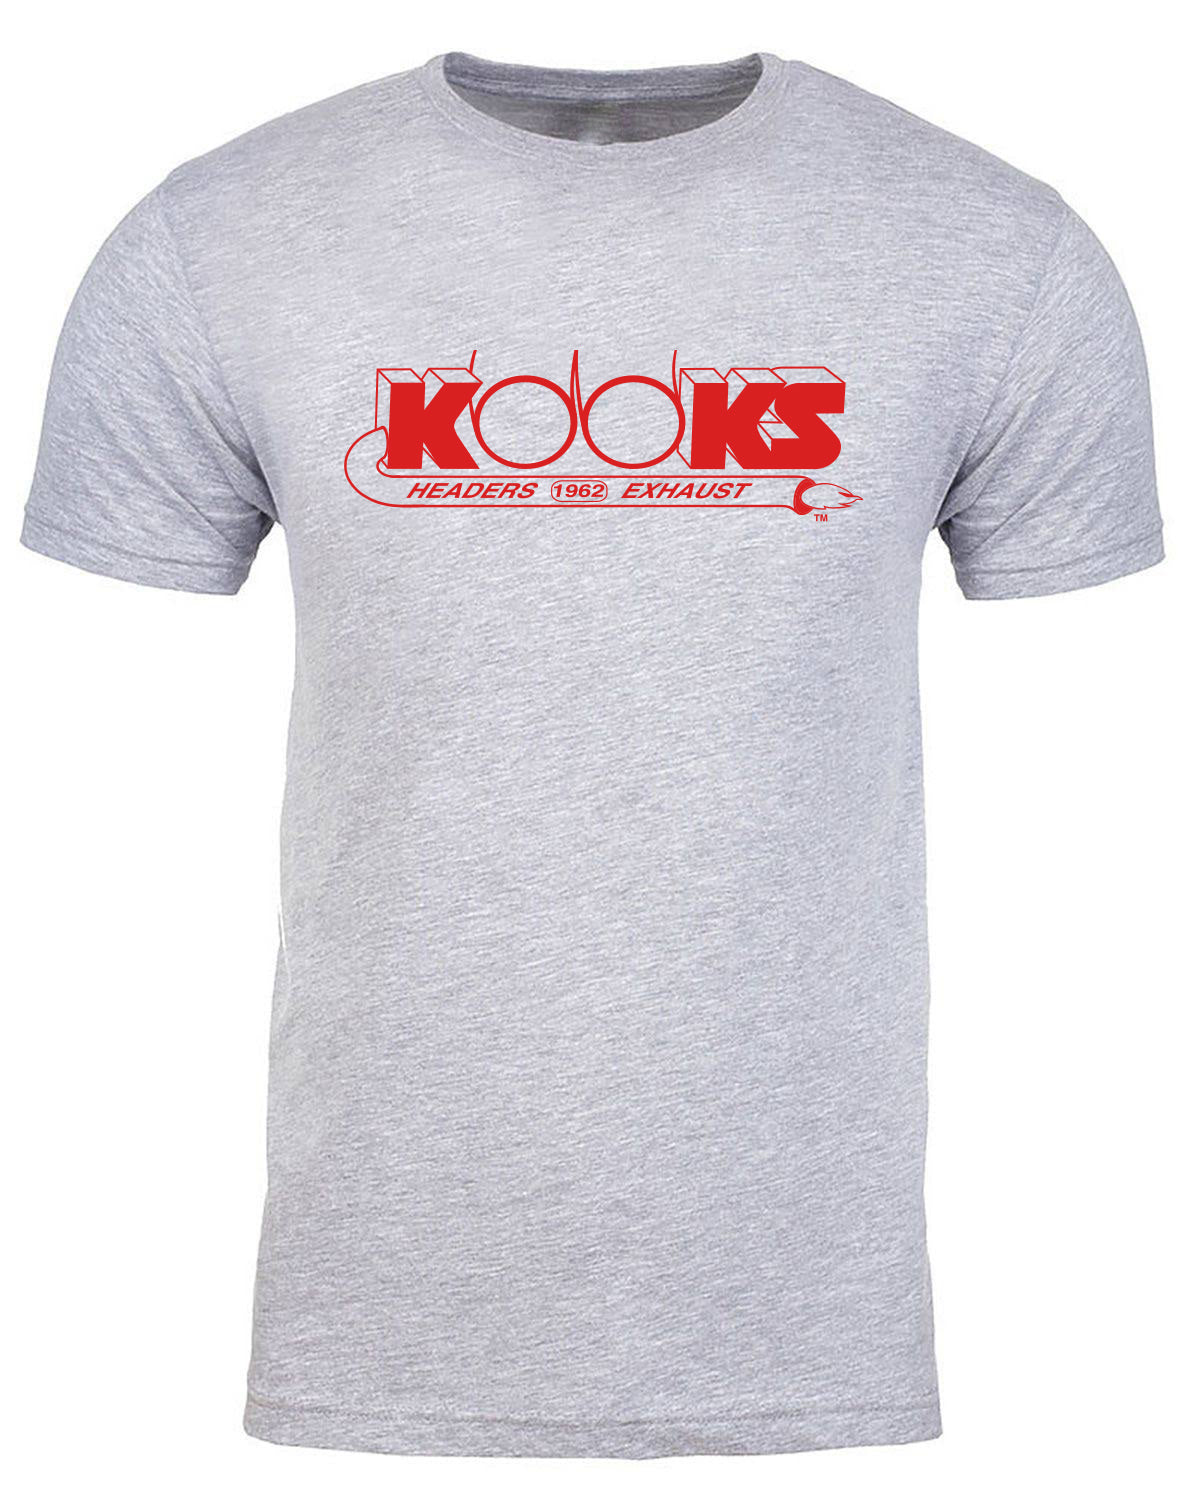 Kooks Custom Headers T-Shirt TS-100647-02